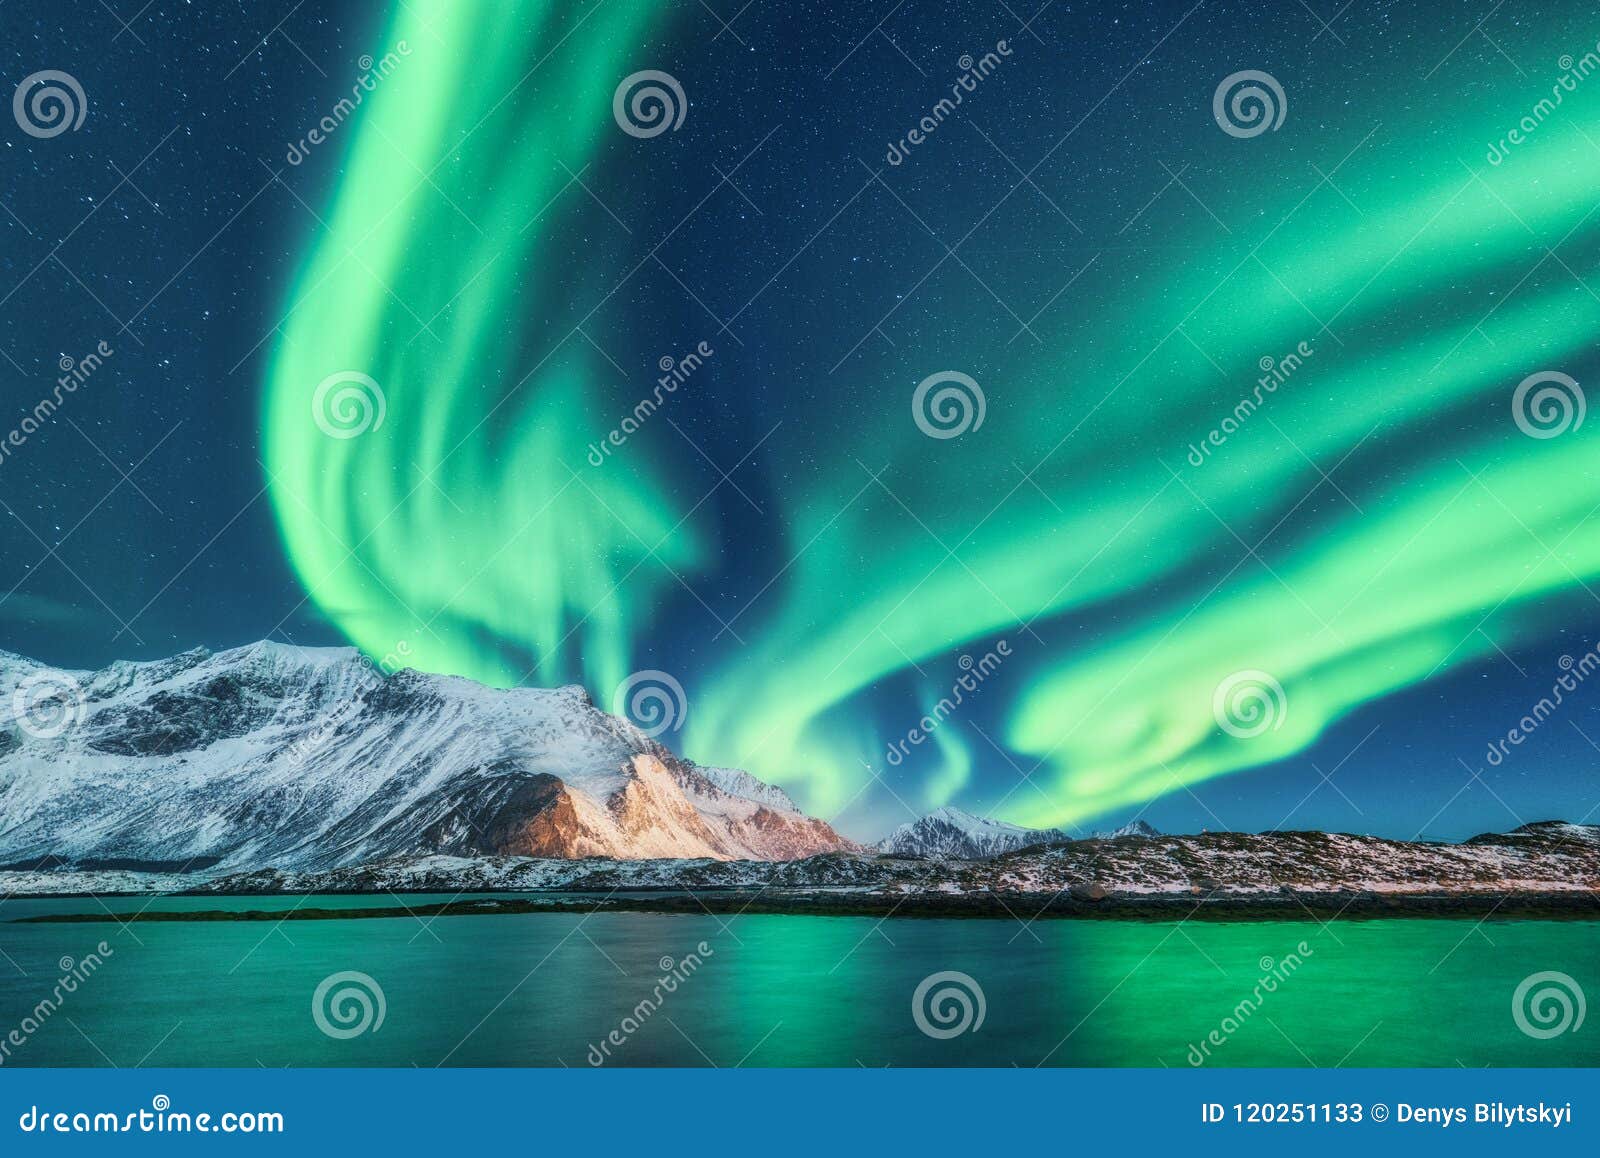 green northern lights in lofoten islands, norway. aurora borealis